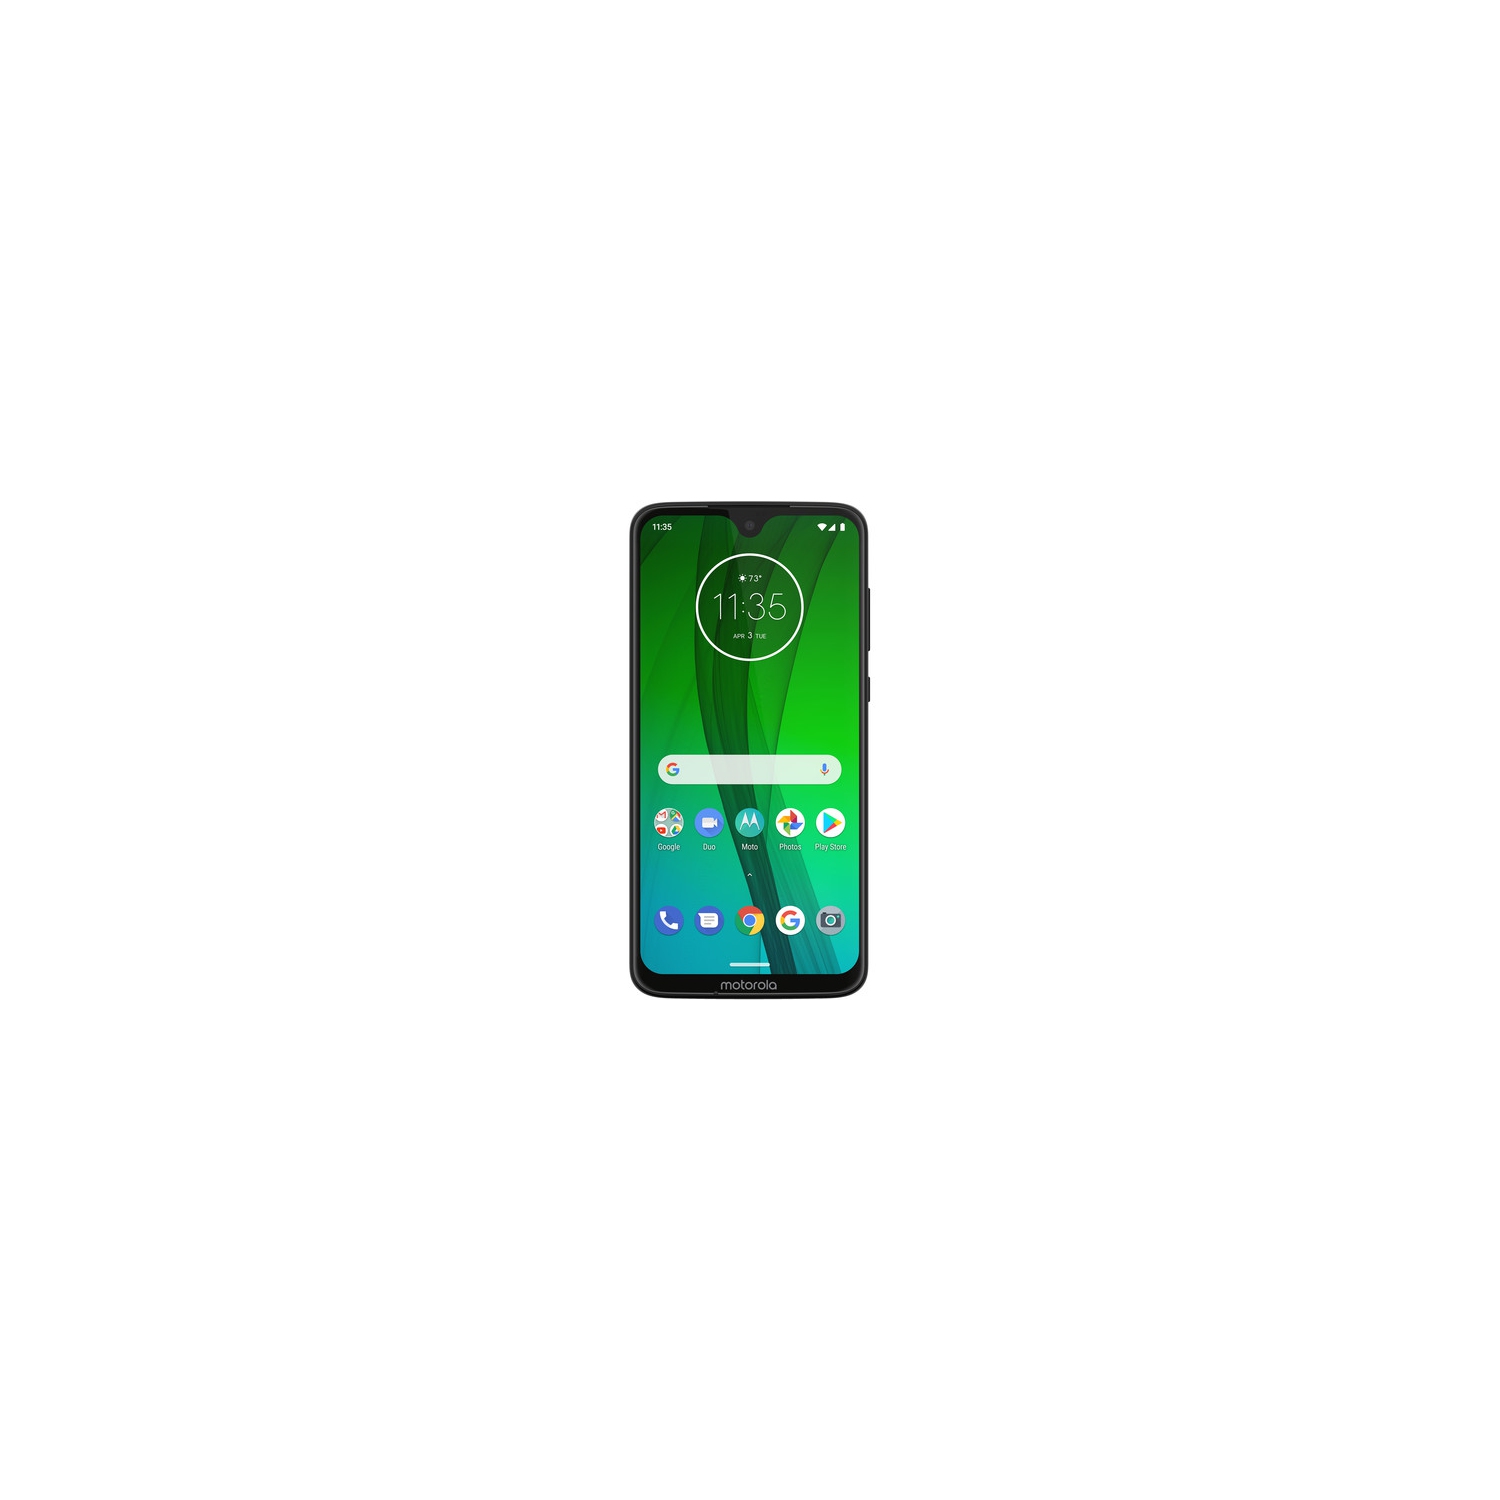 Motorola Moto G7 - Dual SIM - 64GB Smartphone - Black - Unlocked (International Version w/Seller Provided Warranty)